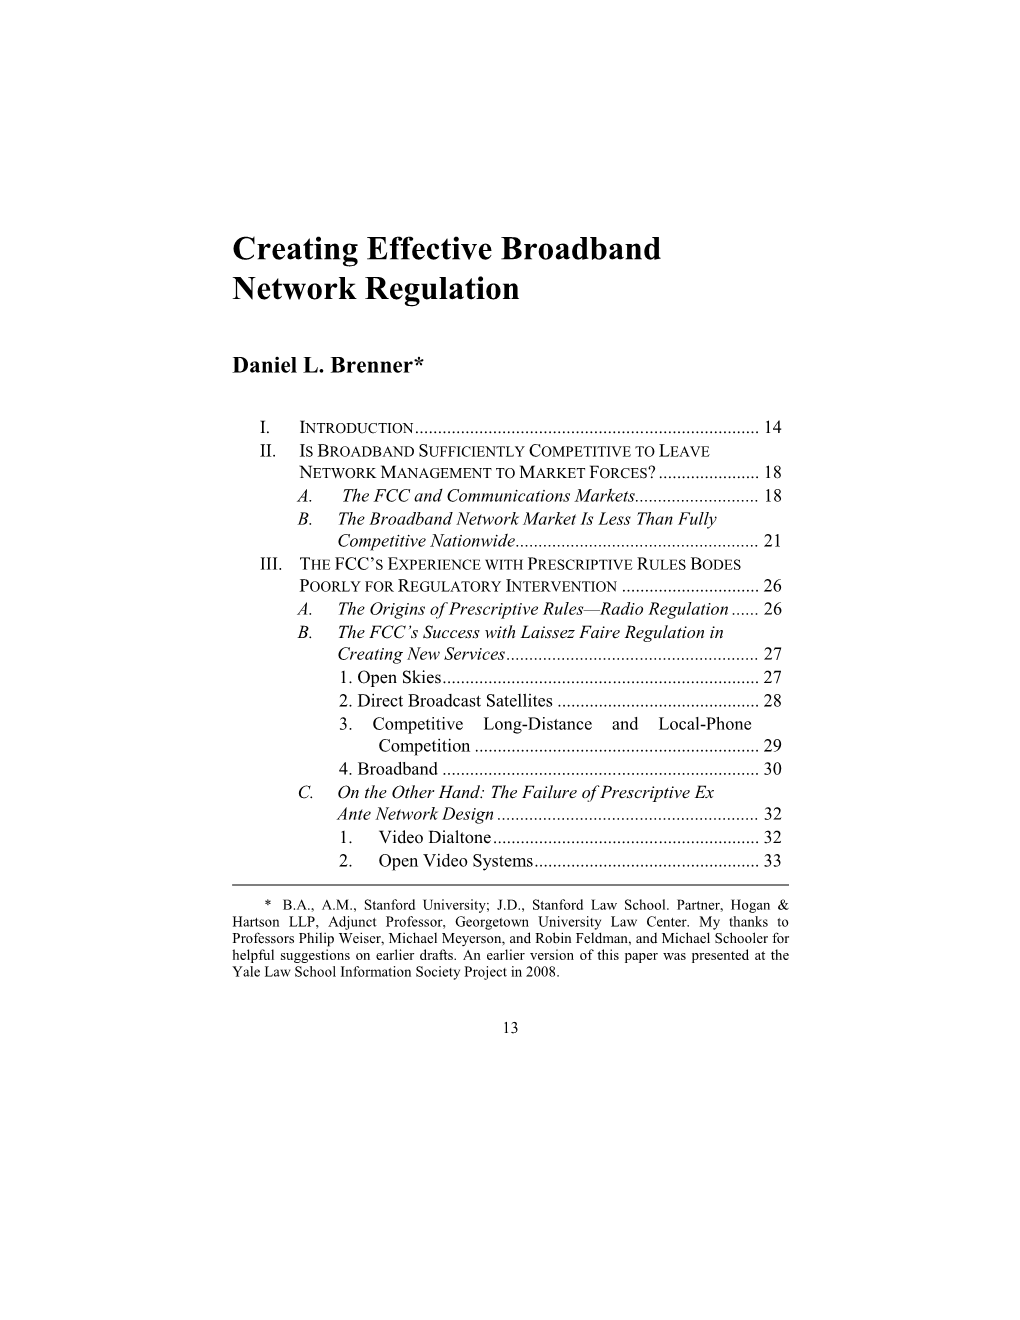 Creating Effective Broadband Network Regulation